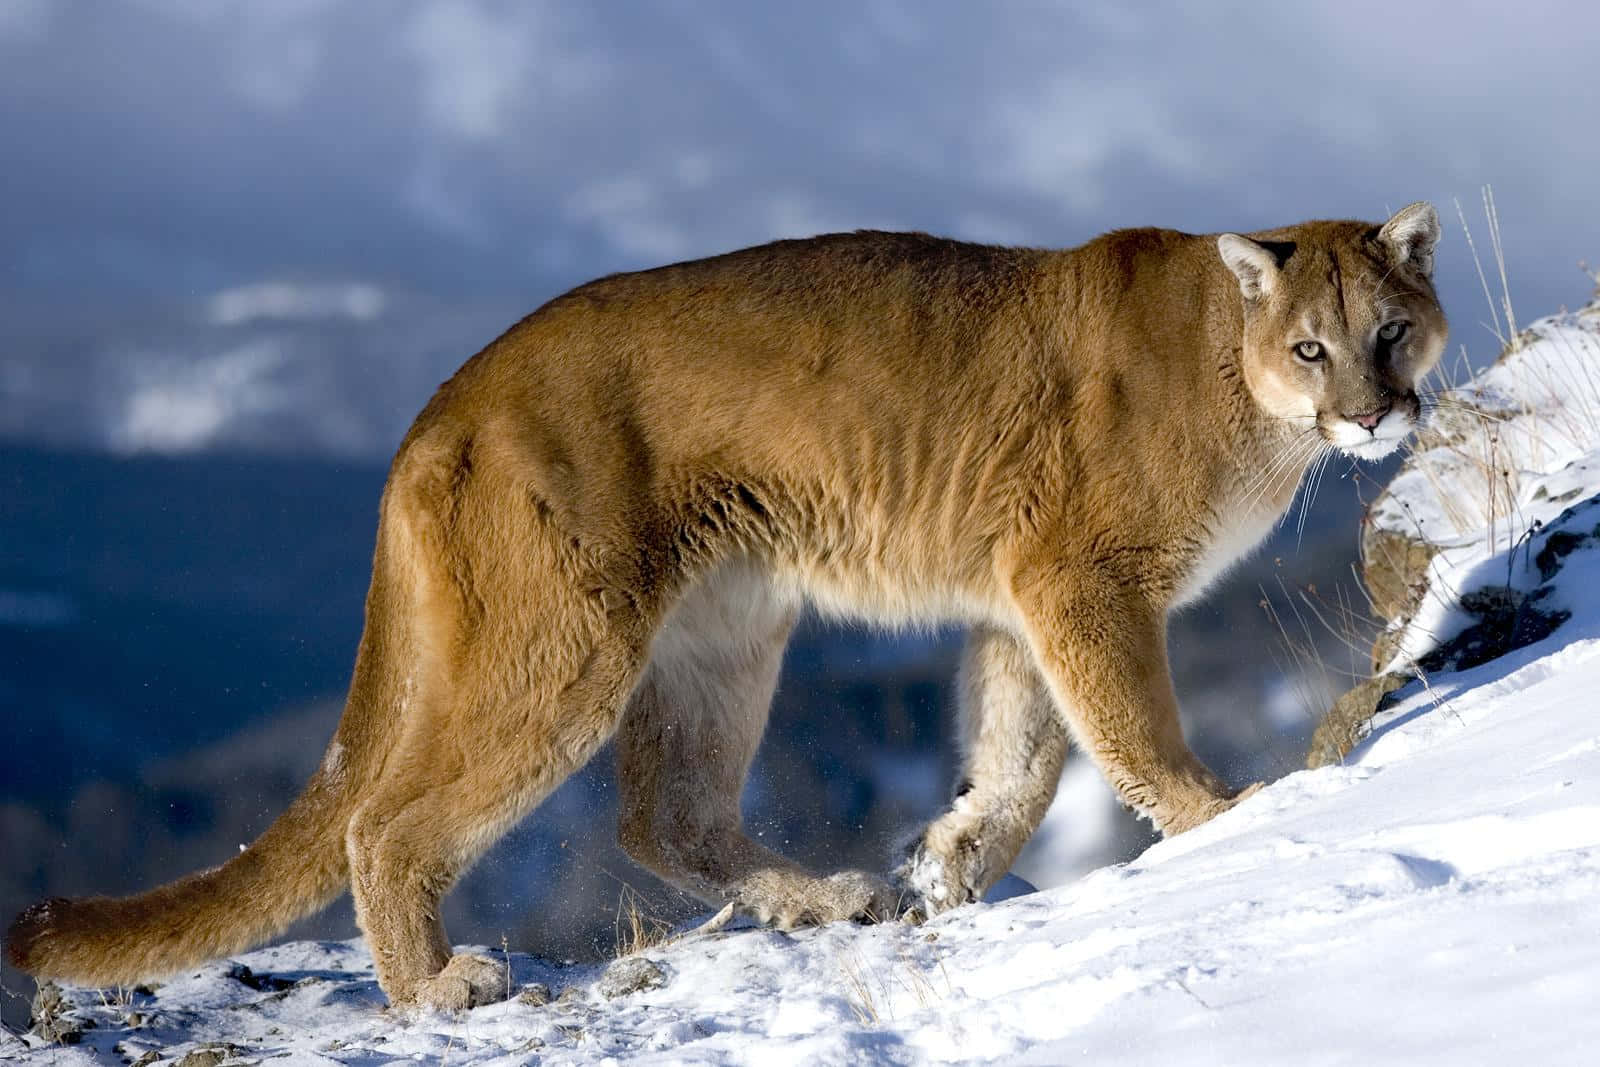 Wild Animals Cougar Walking On Snow Picture